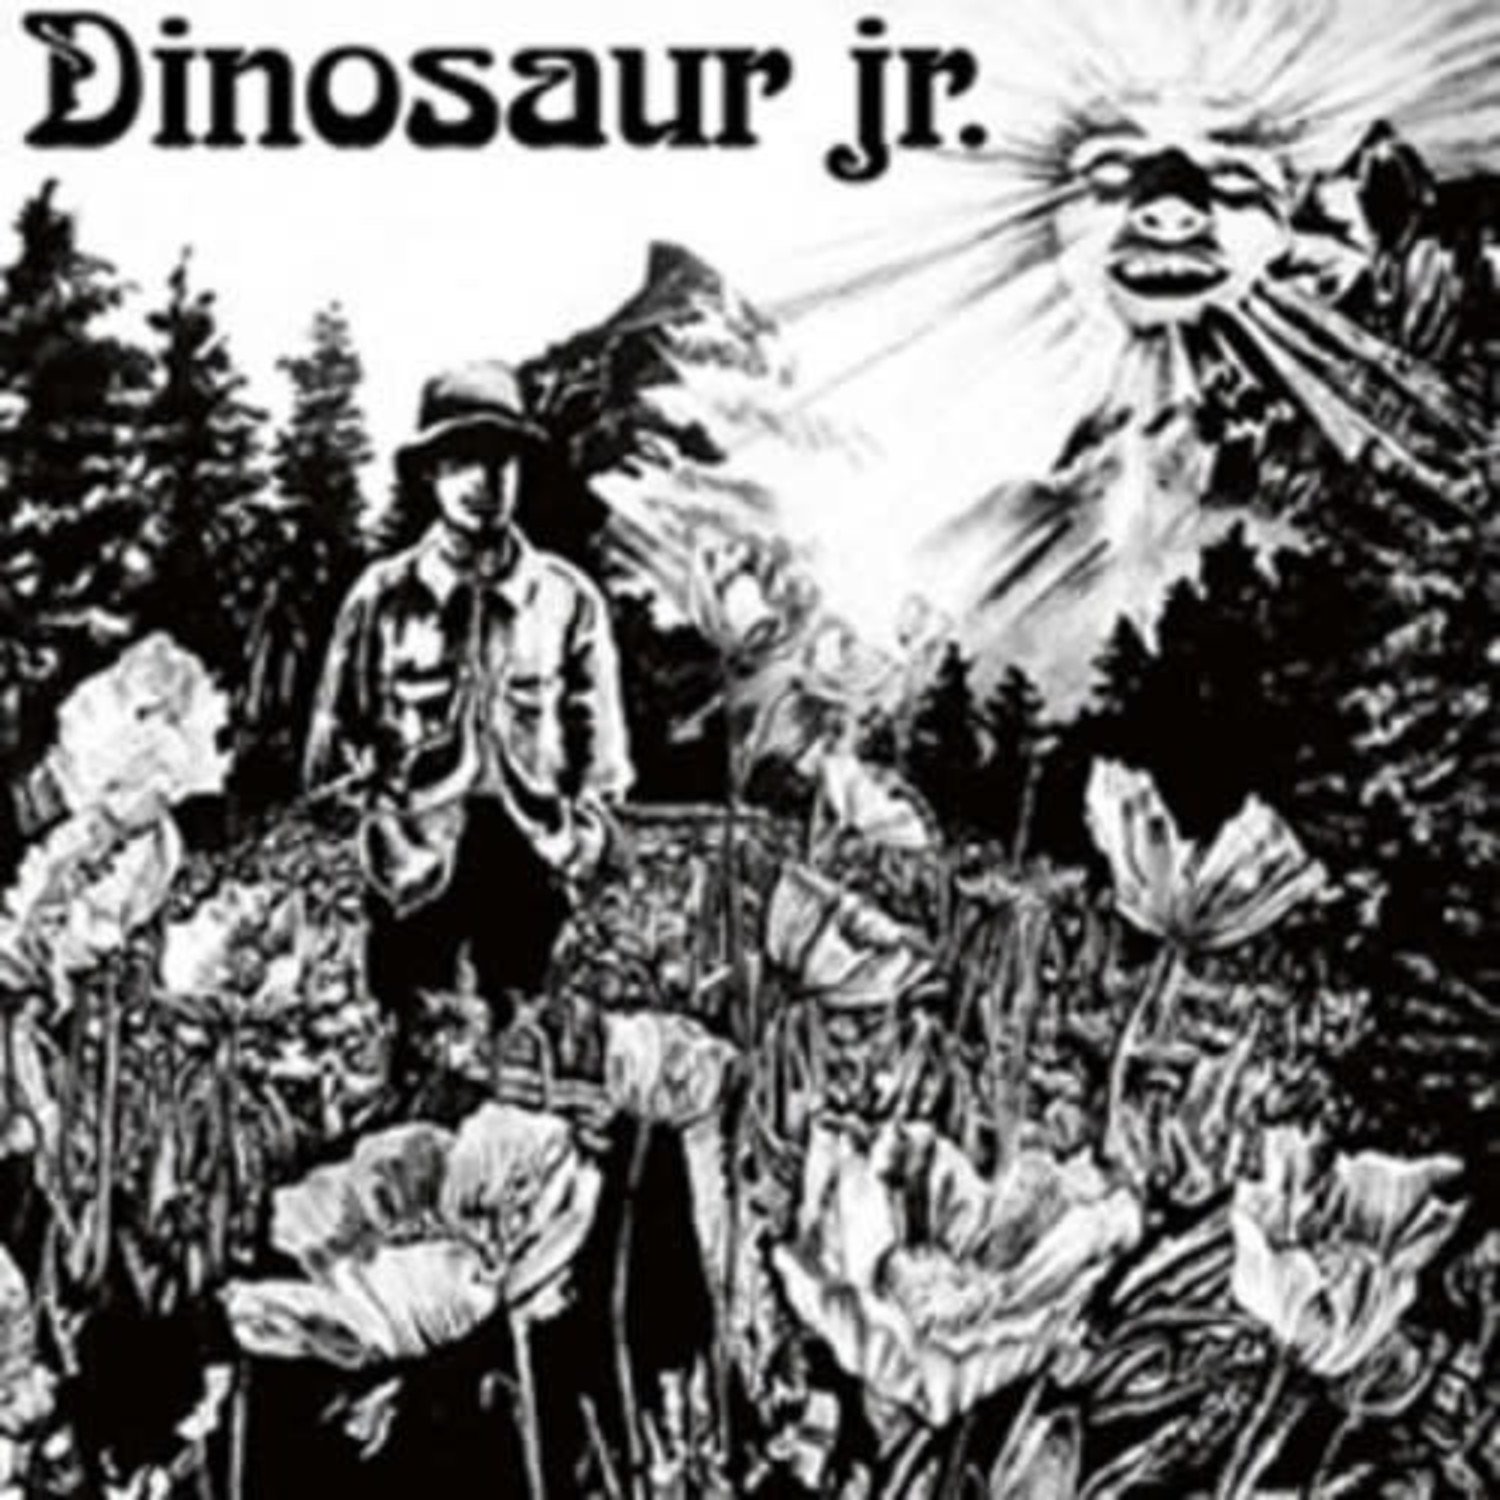 Dinosaur Jr. - (self-titled debut) LP - Wax Trax Records